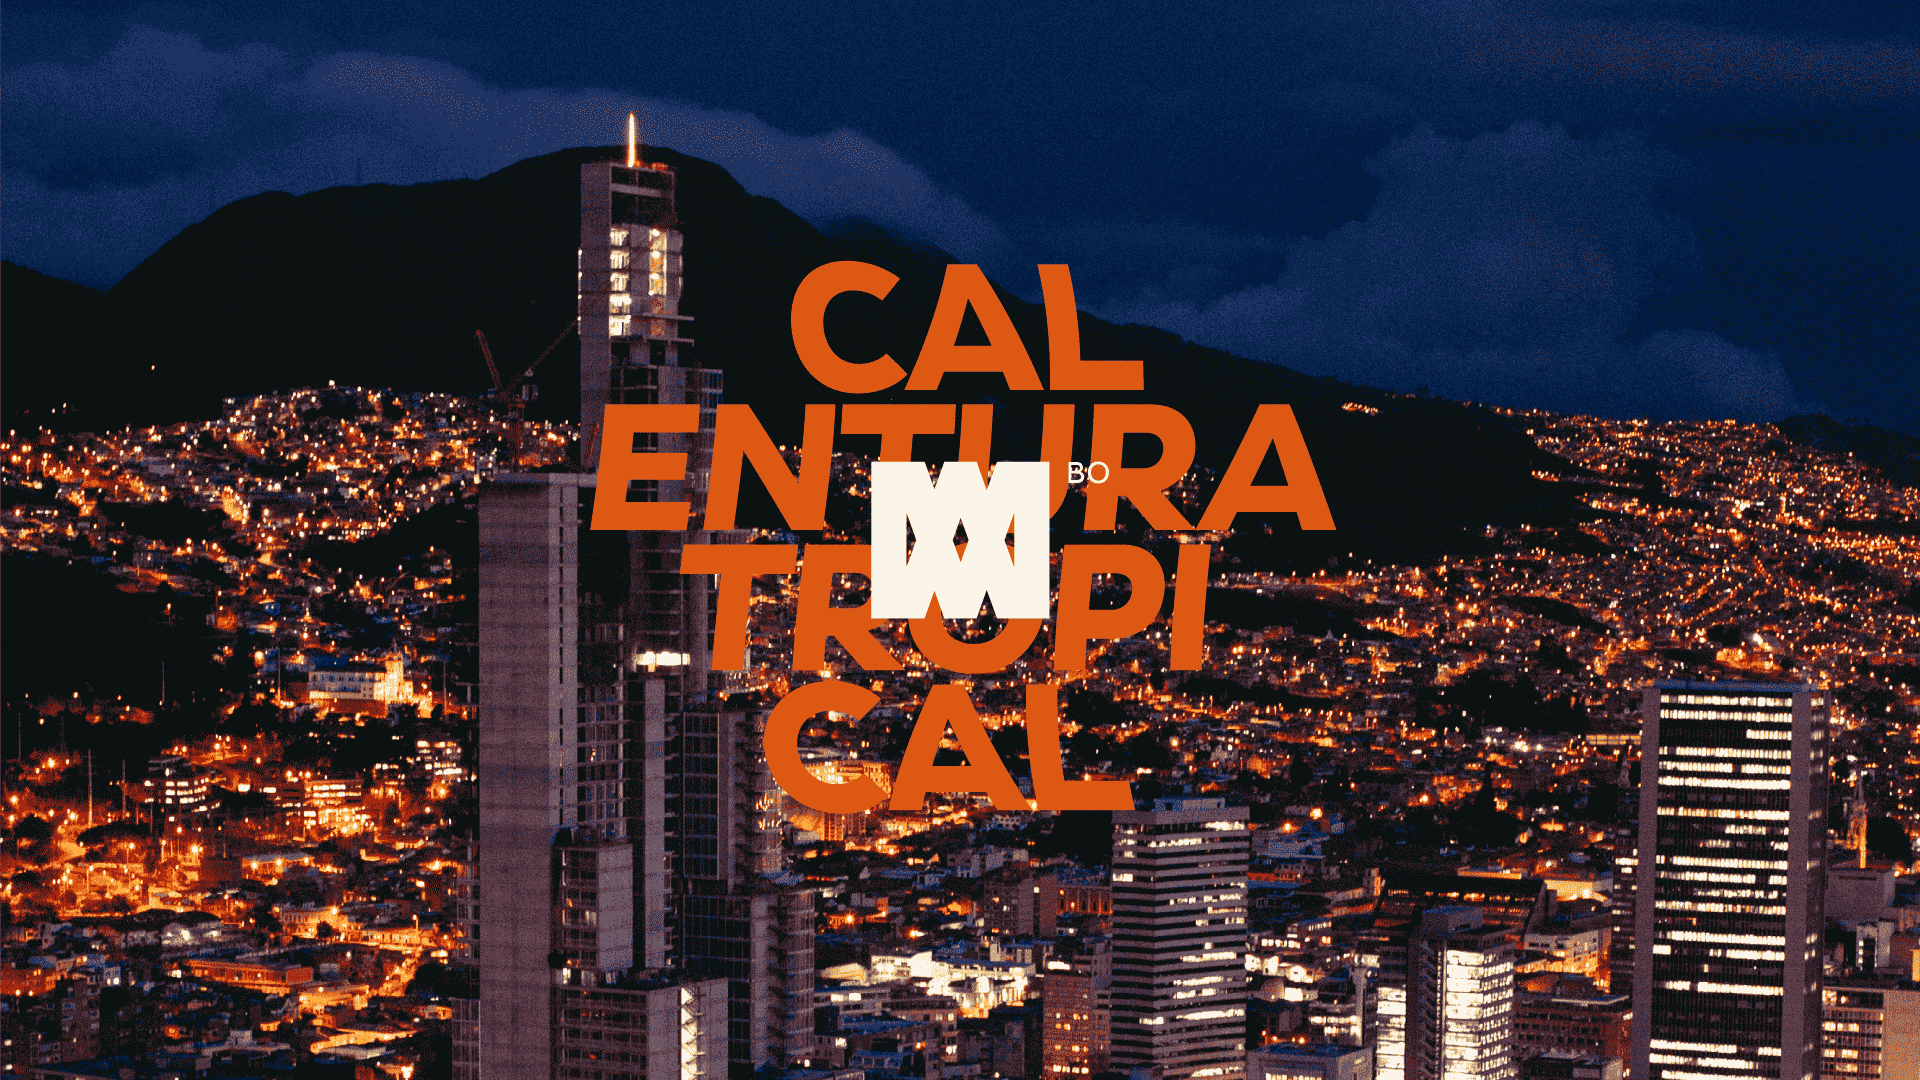 'Calentura Tropical' - 'Night Embassy Bogotá'